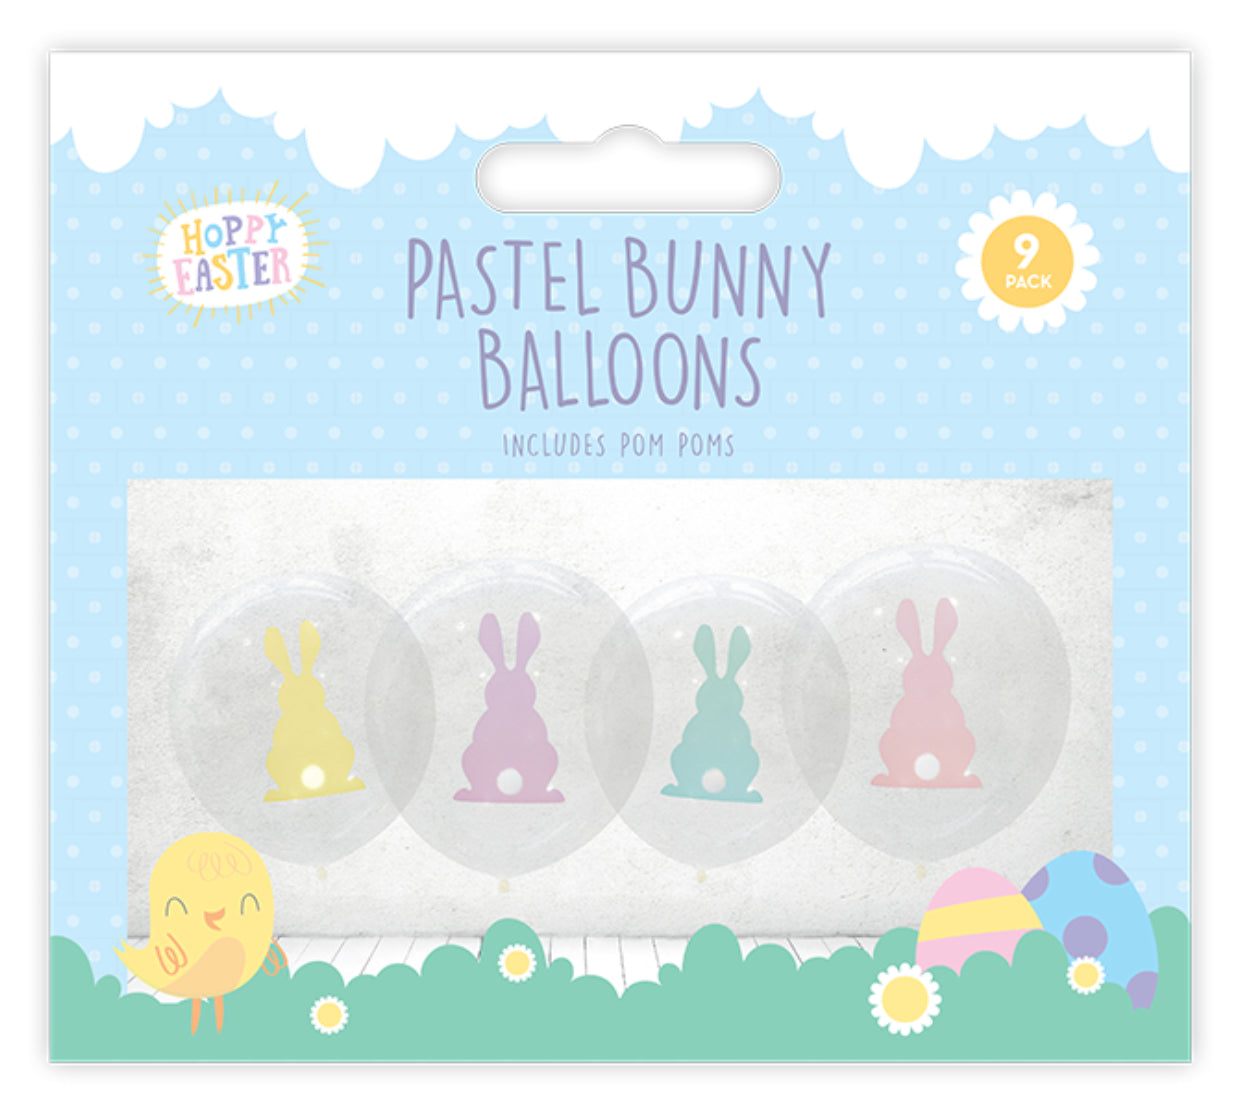 * Pastel Bunny Balloons 9pk